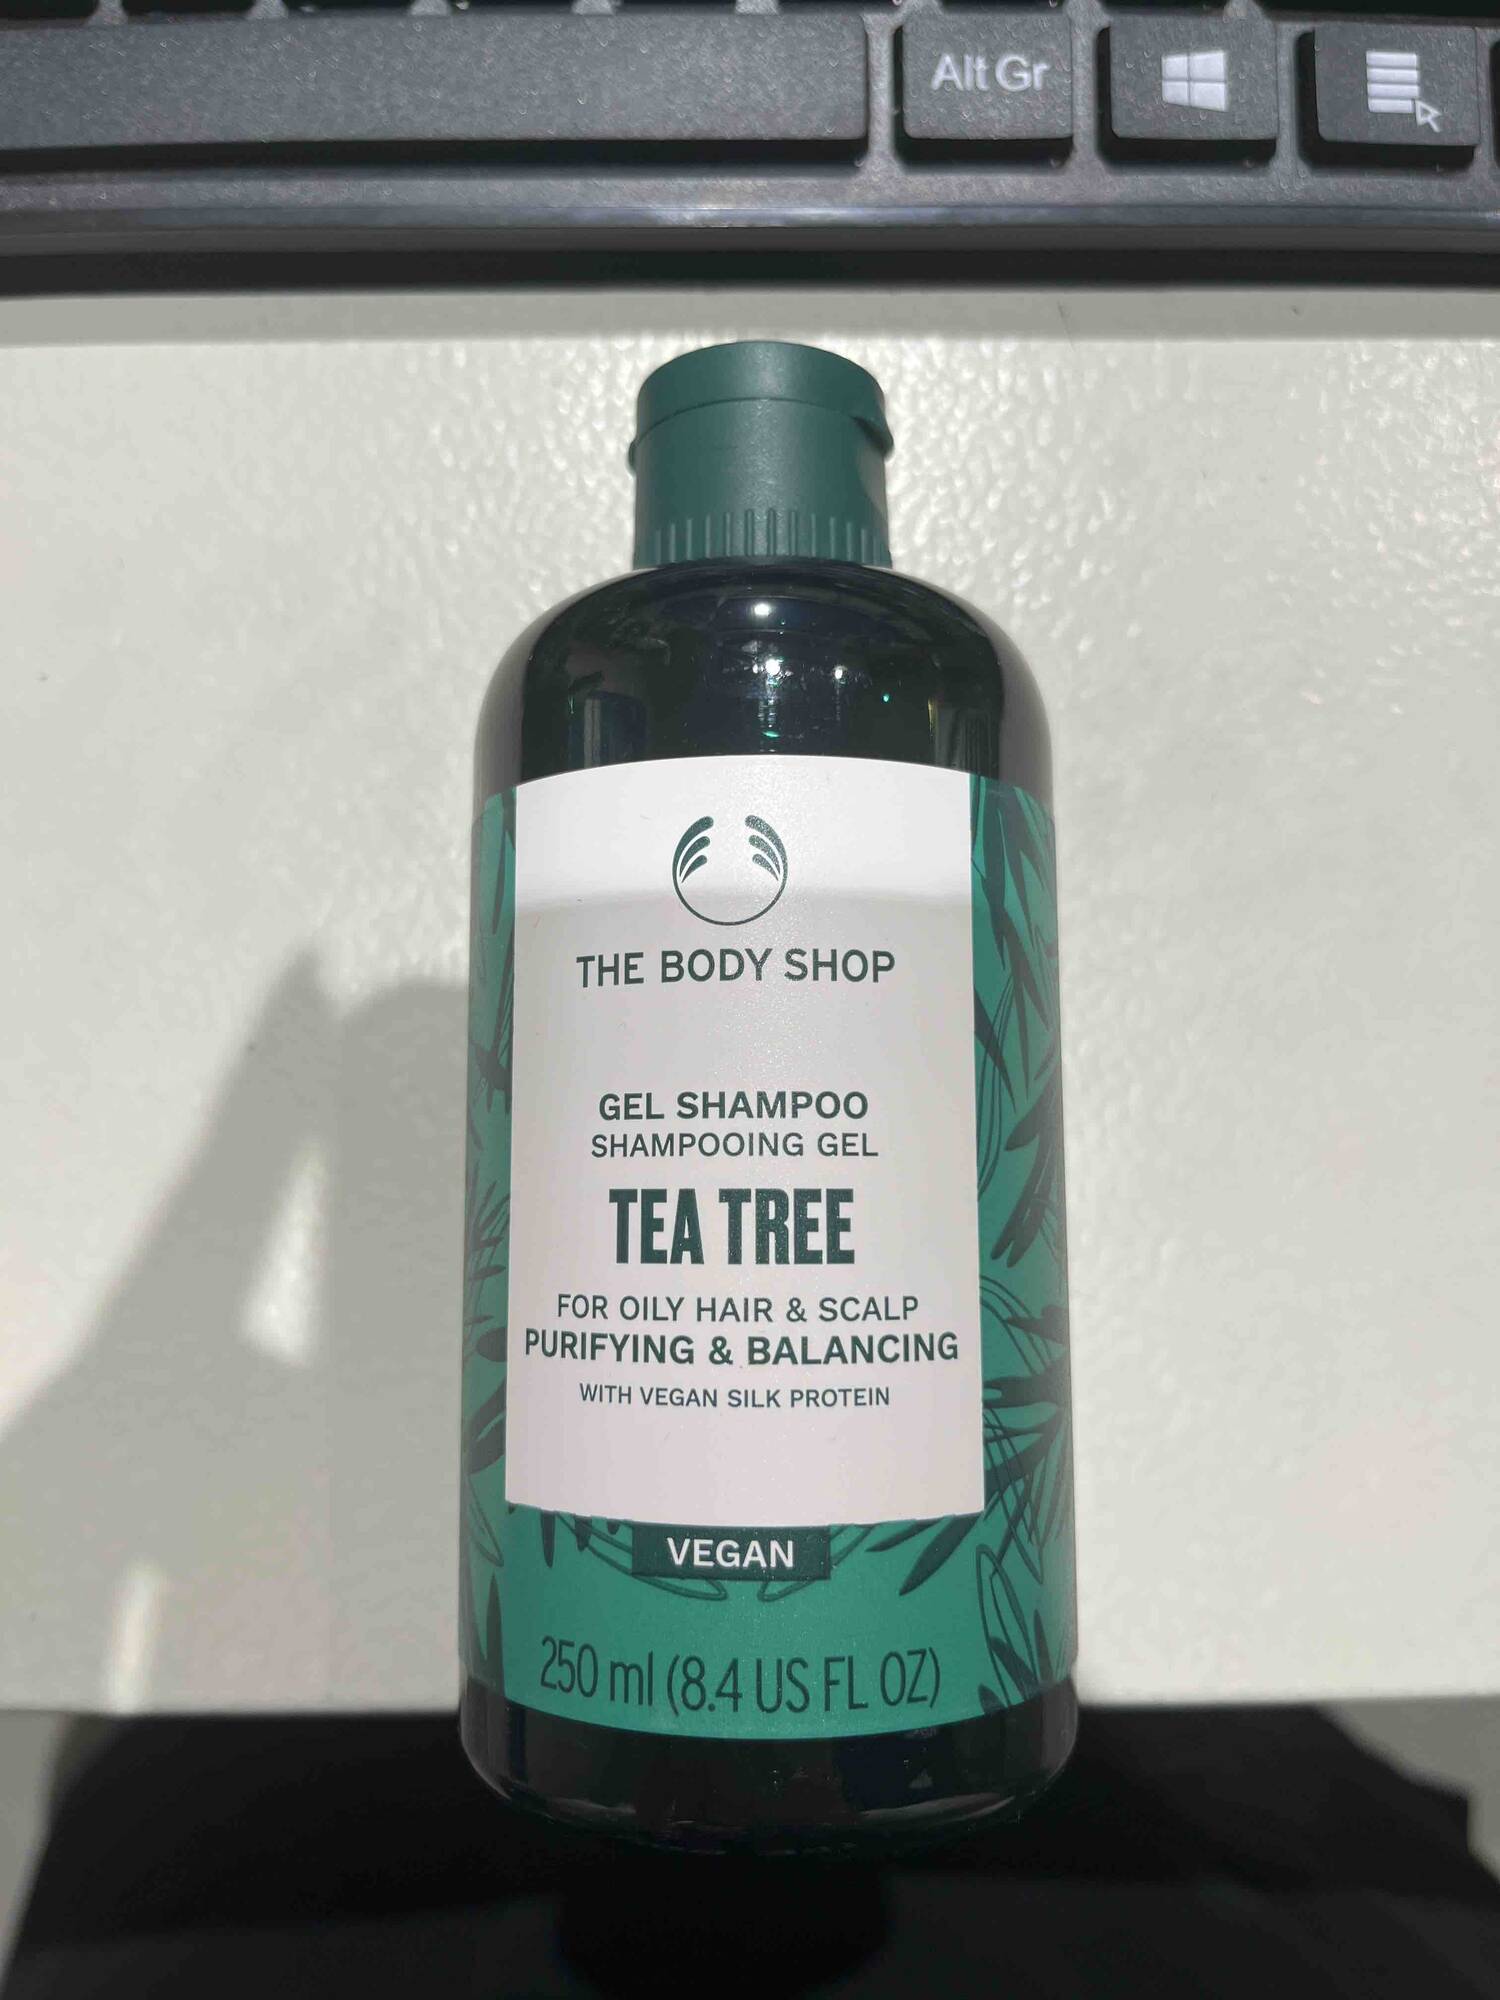 THE BODY SHOP - Tea tree - Shampooing gel purifying & balancing